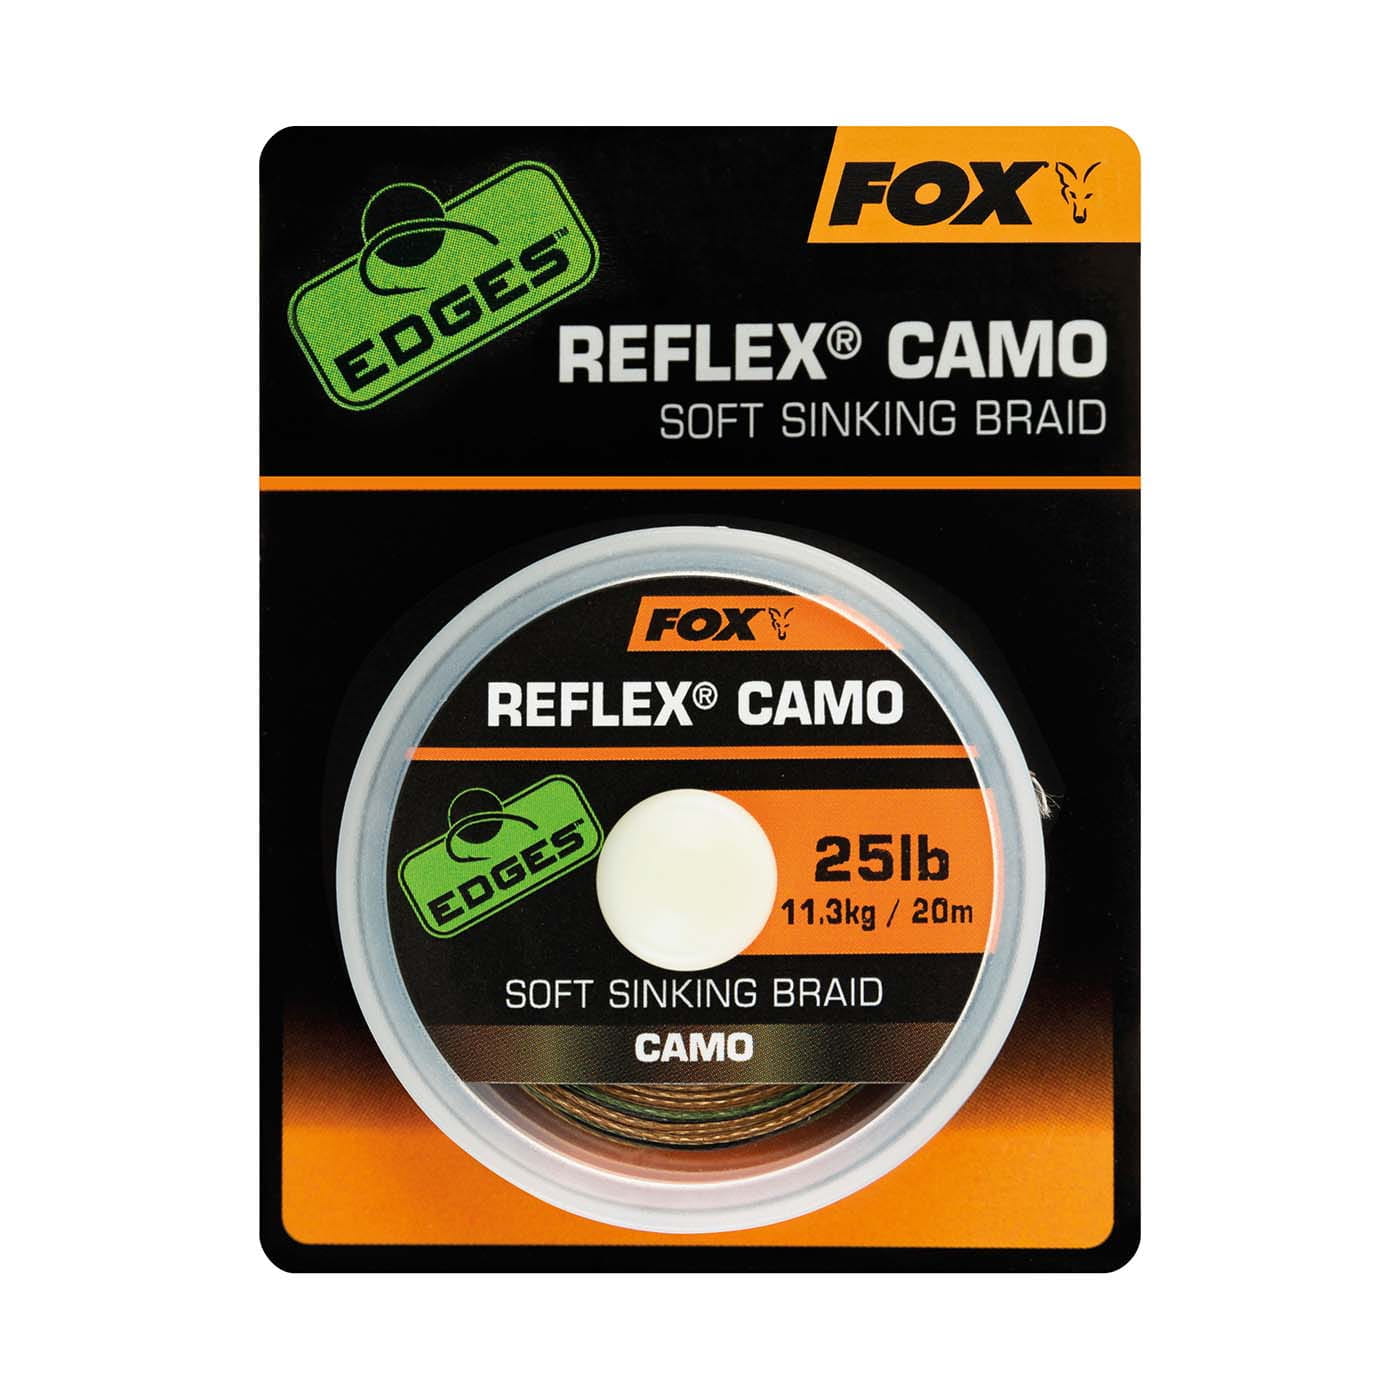 Reflex Camo Soft Sinking Braid